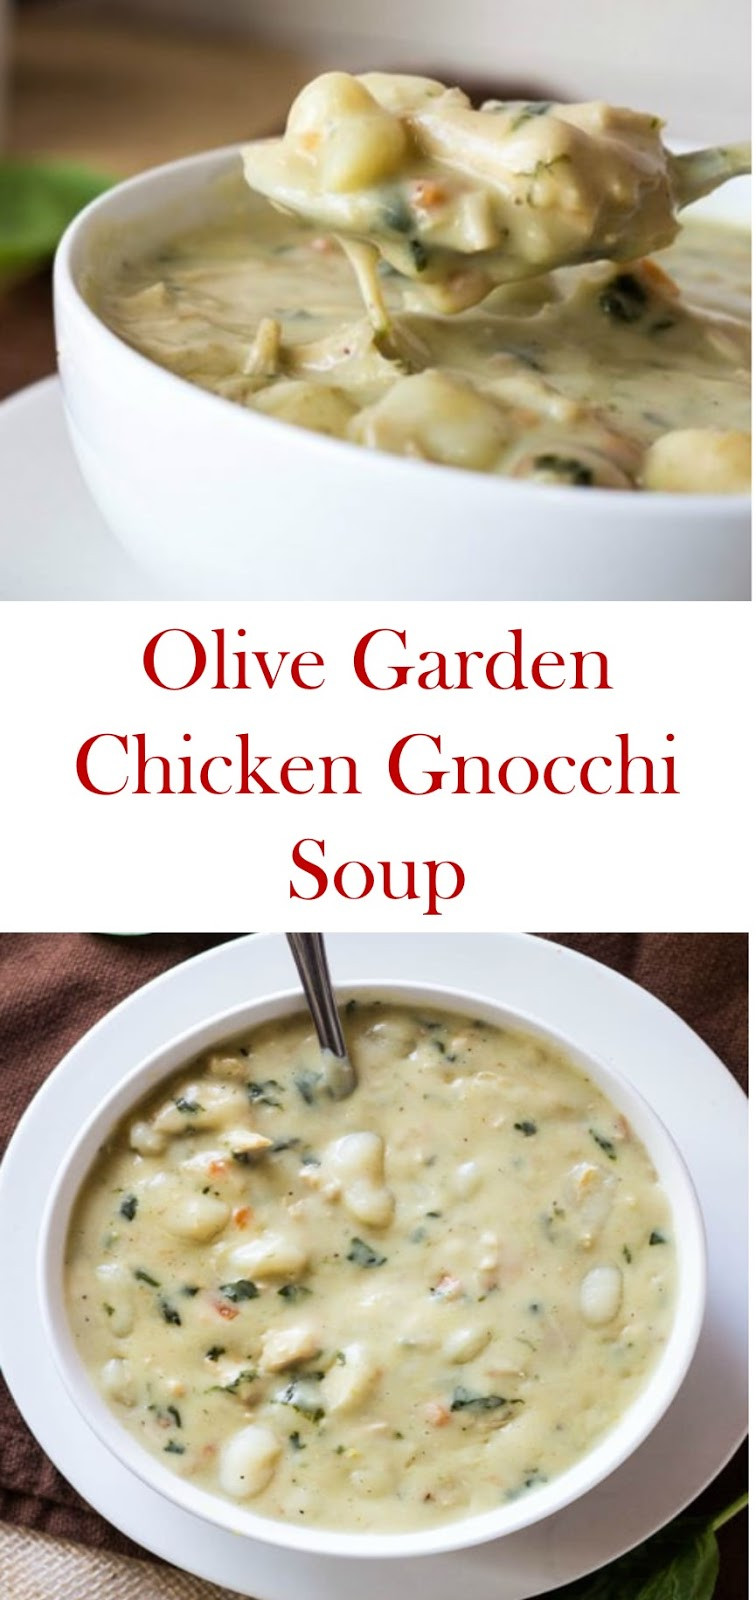 Olive Garden Chicken &amp; Gnocchi Soup
 Olive Garden Chicken Gnocchi Soup Recipe Healthy Tutorial